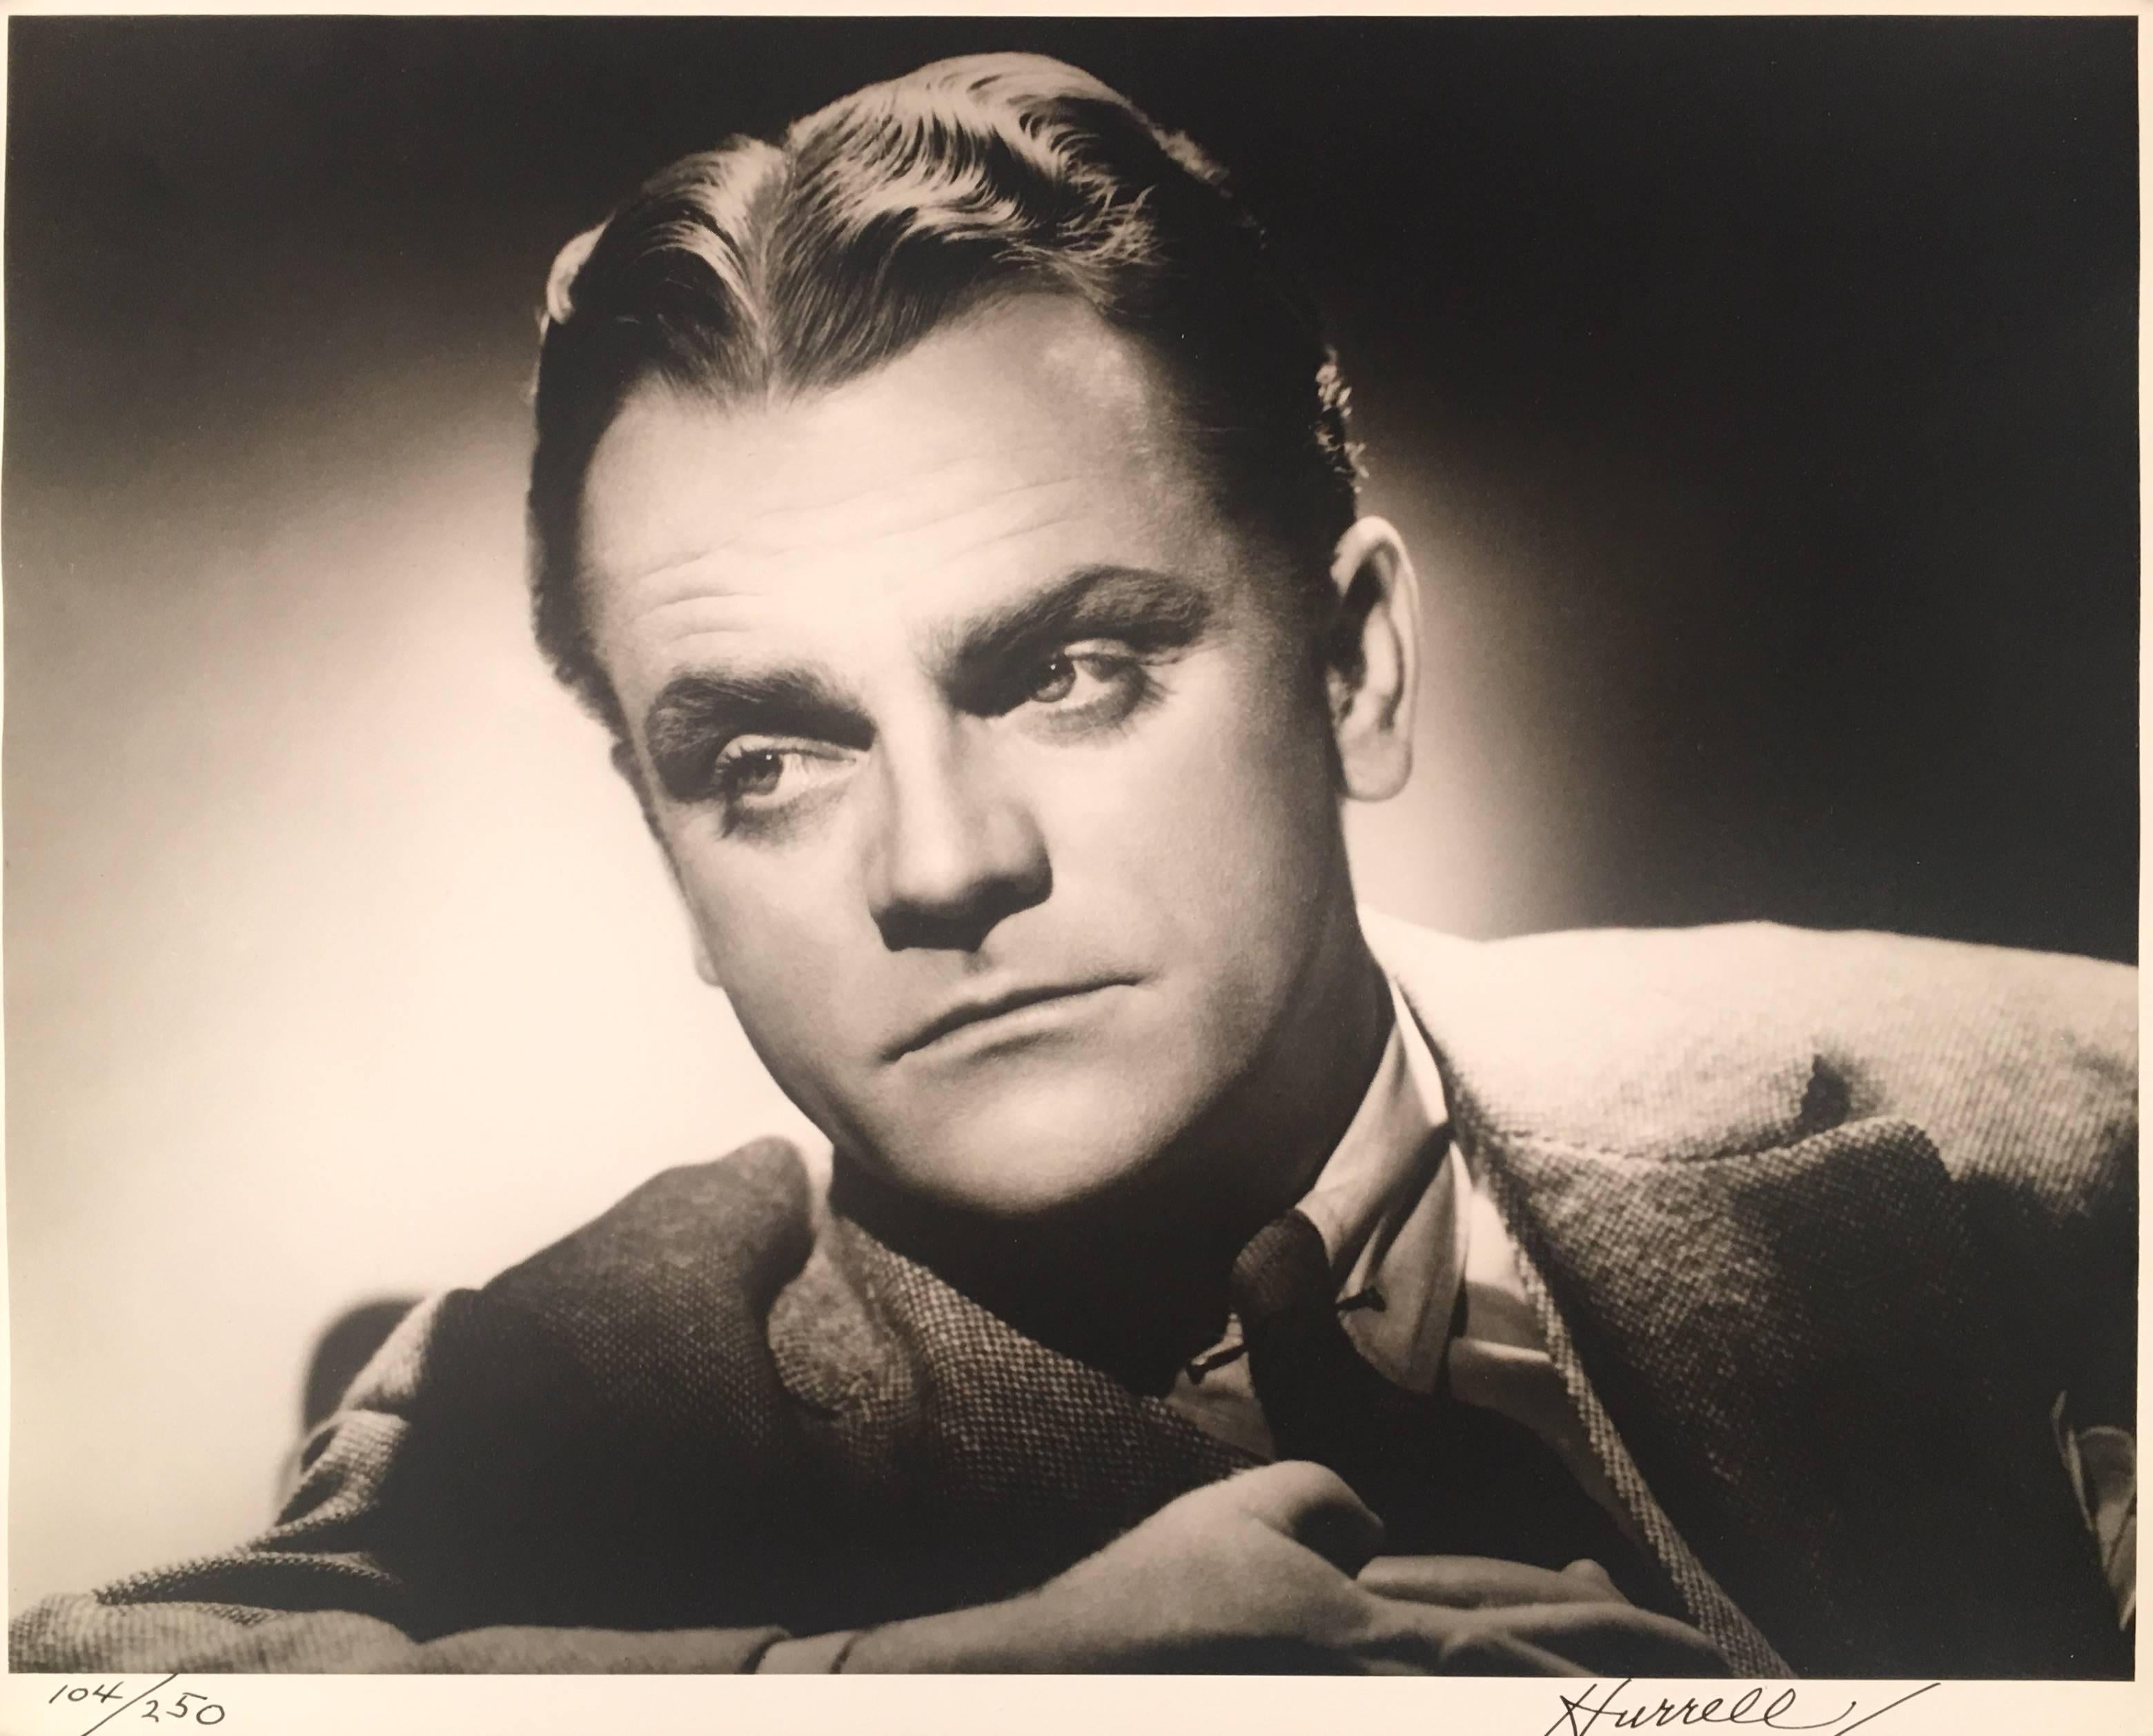 George Hurrell, "James Cagney", original photograph from original negative